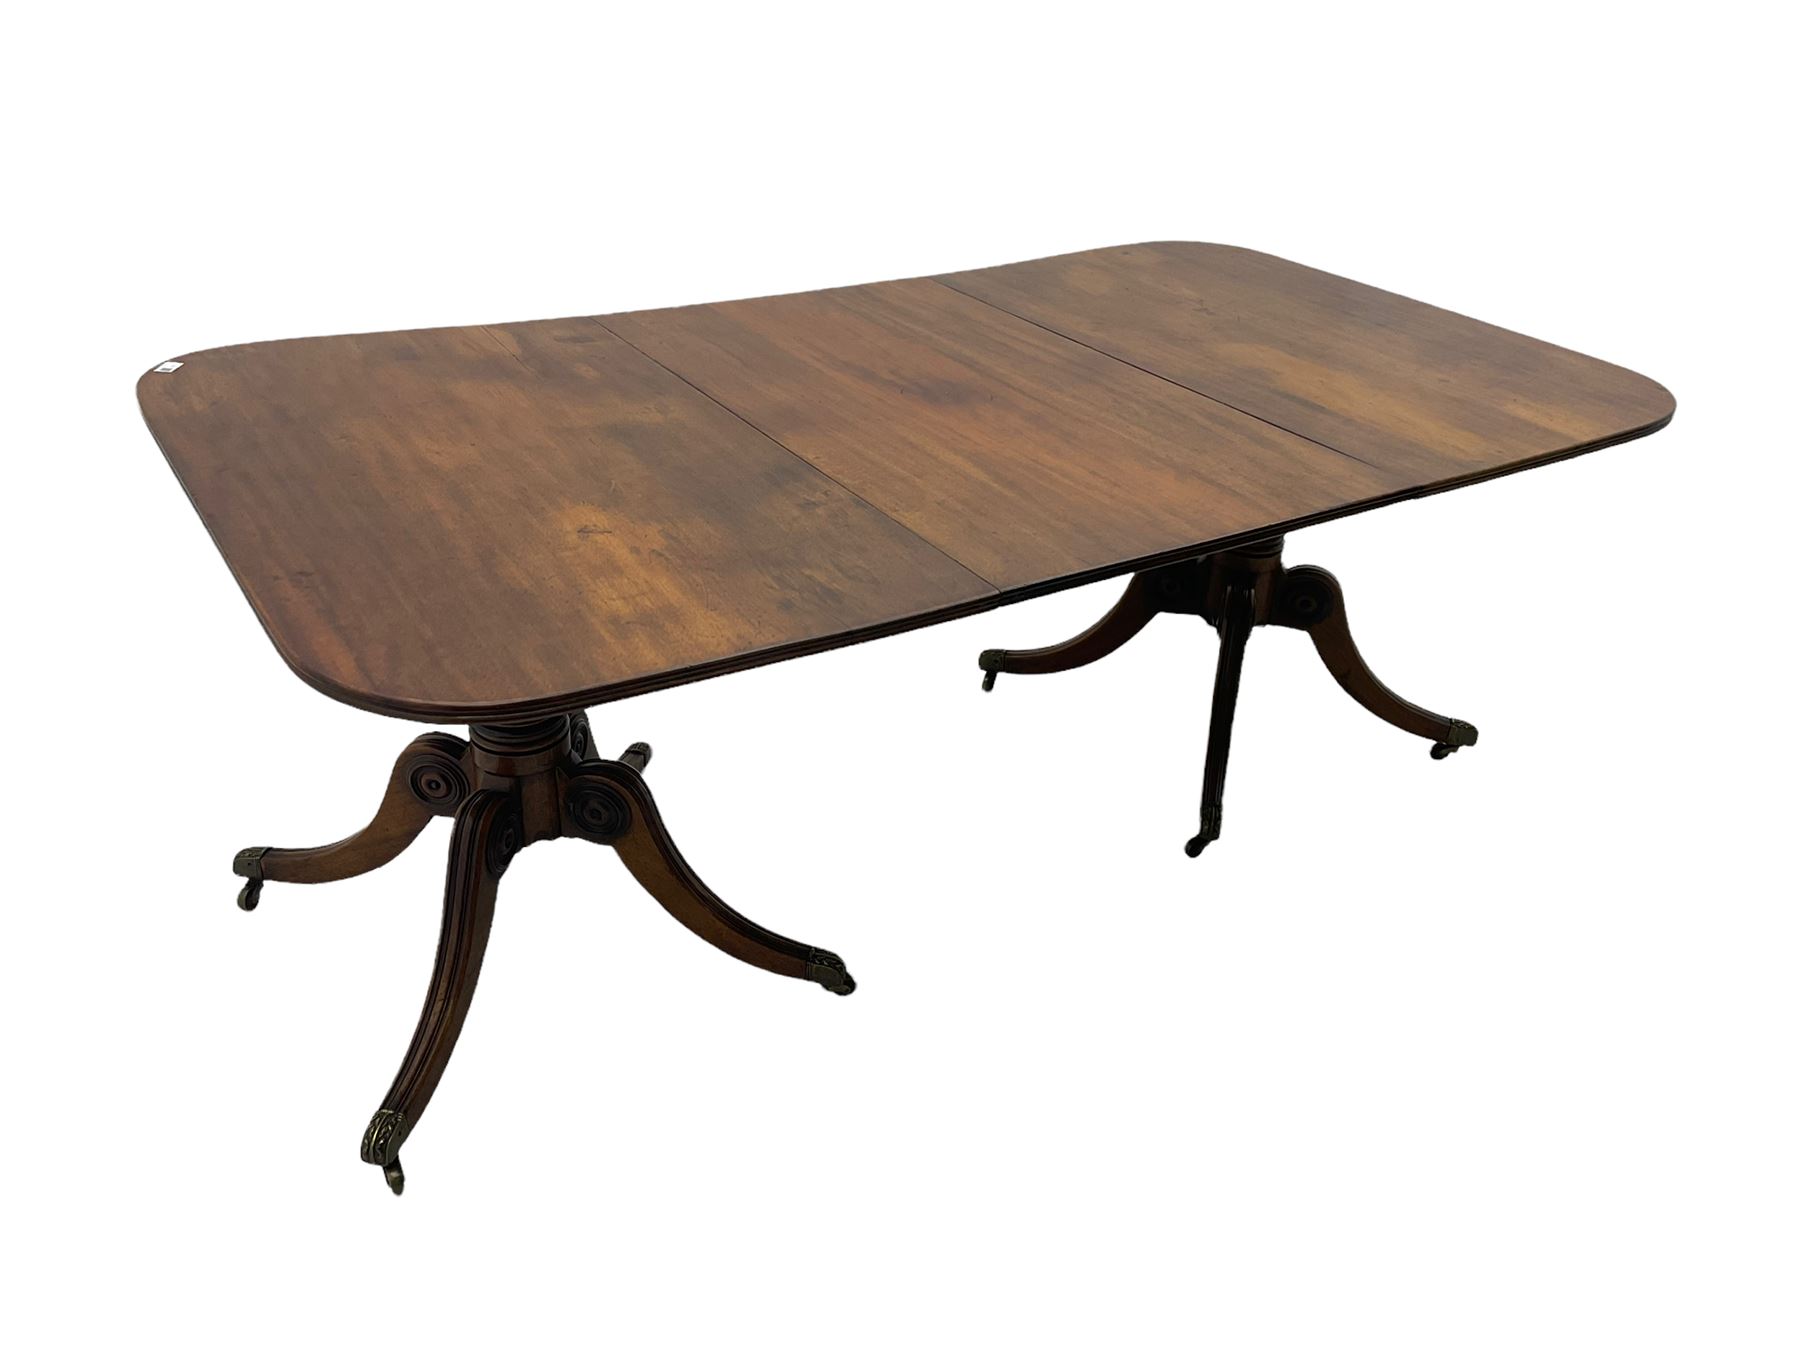 Early 19th century mahogany extending dining table